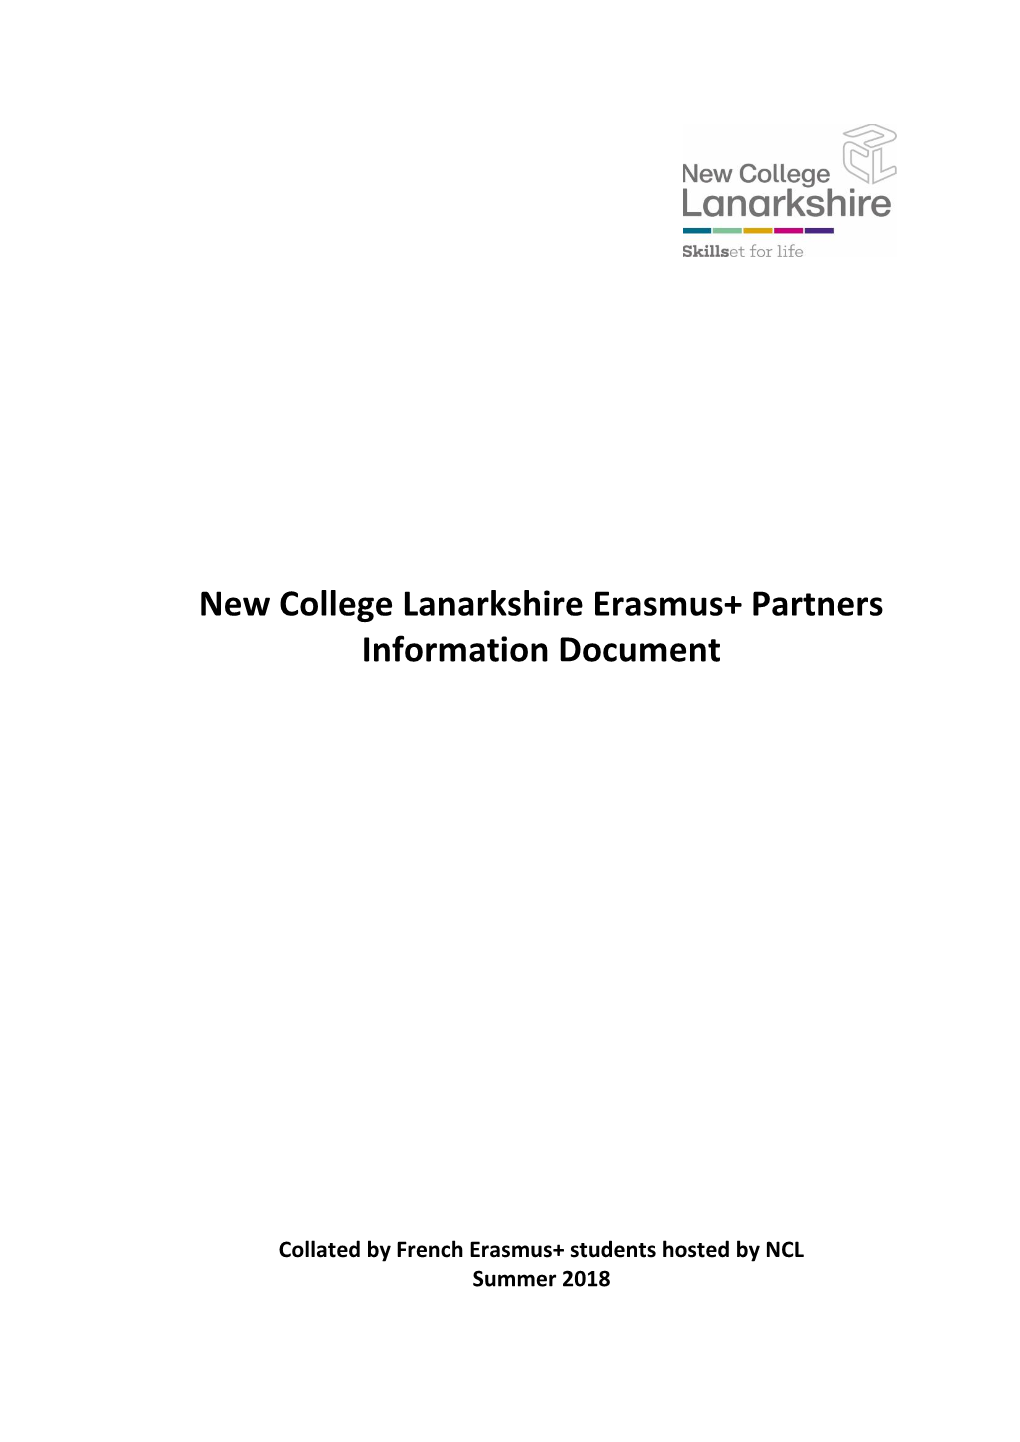 New College Lanarkshire Erasmus+ Partners Information Document